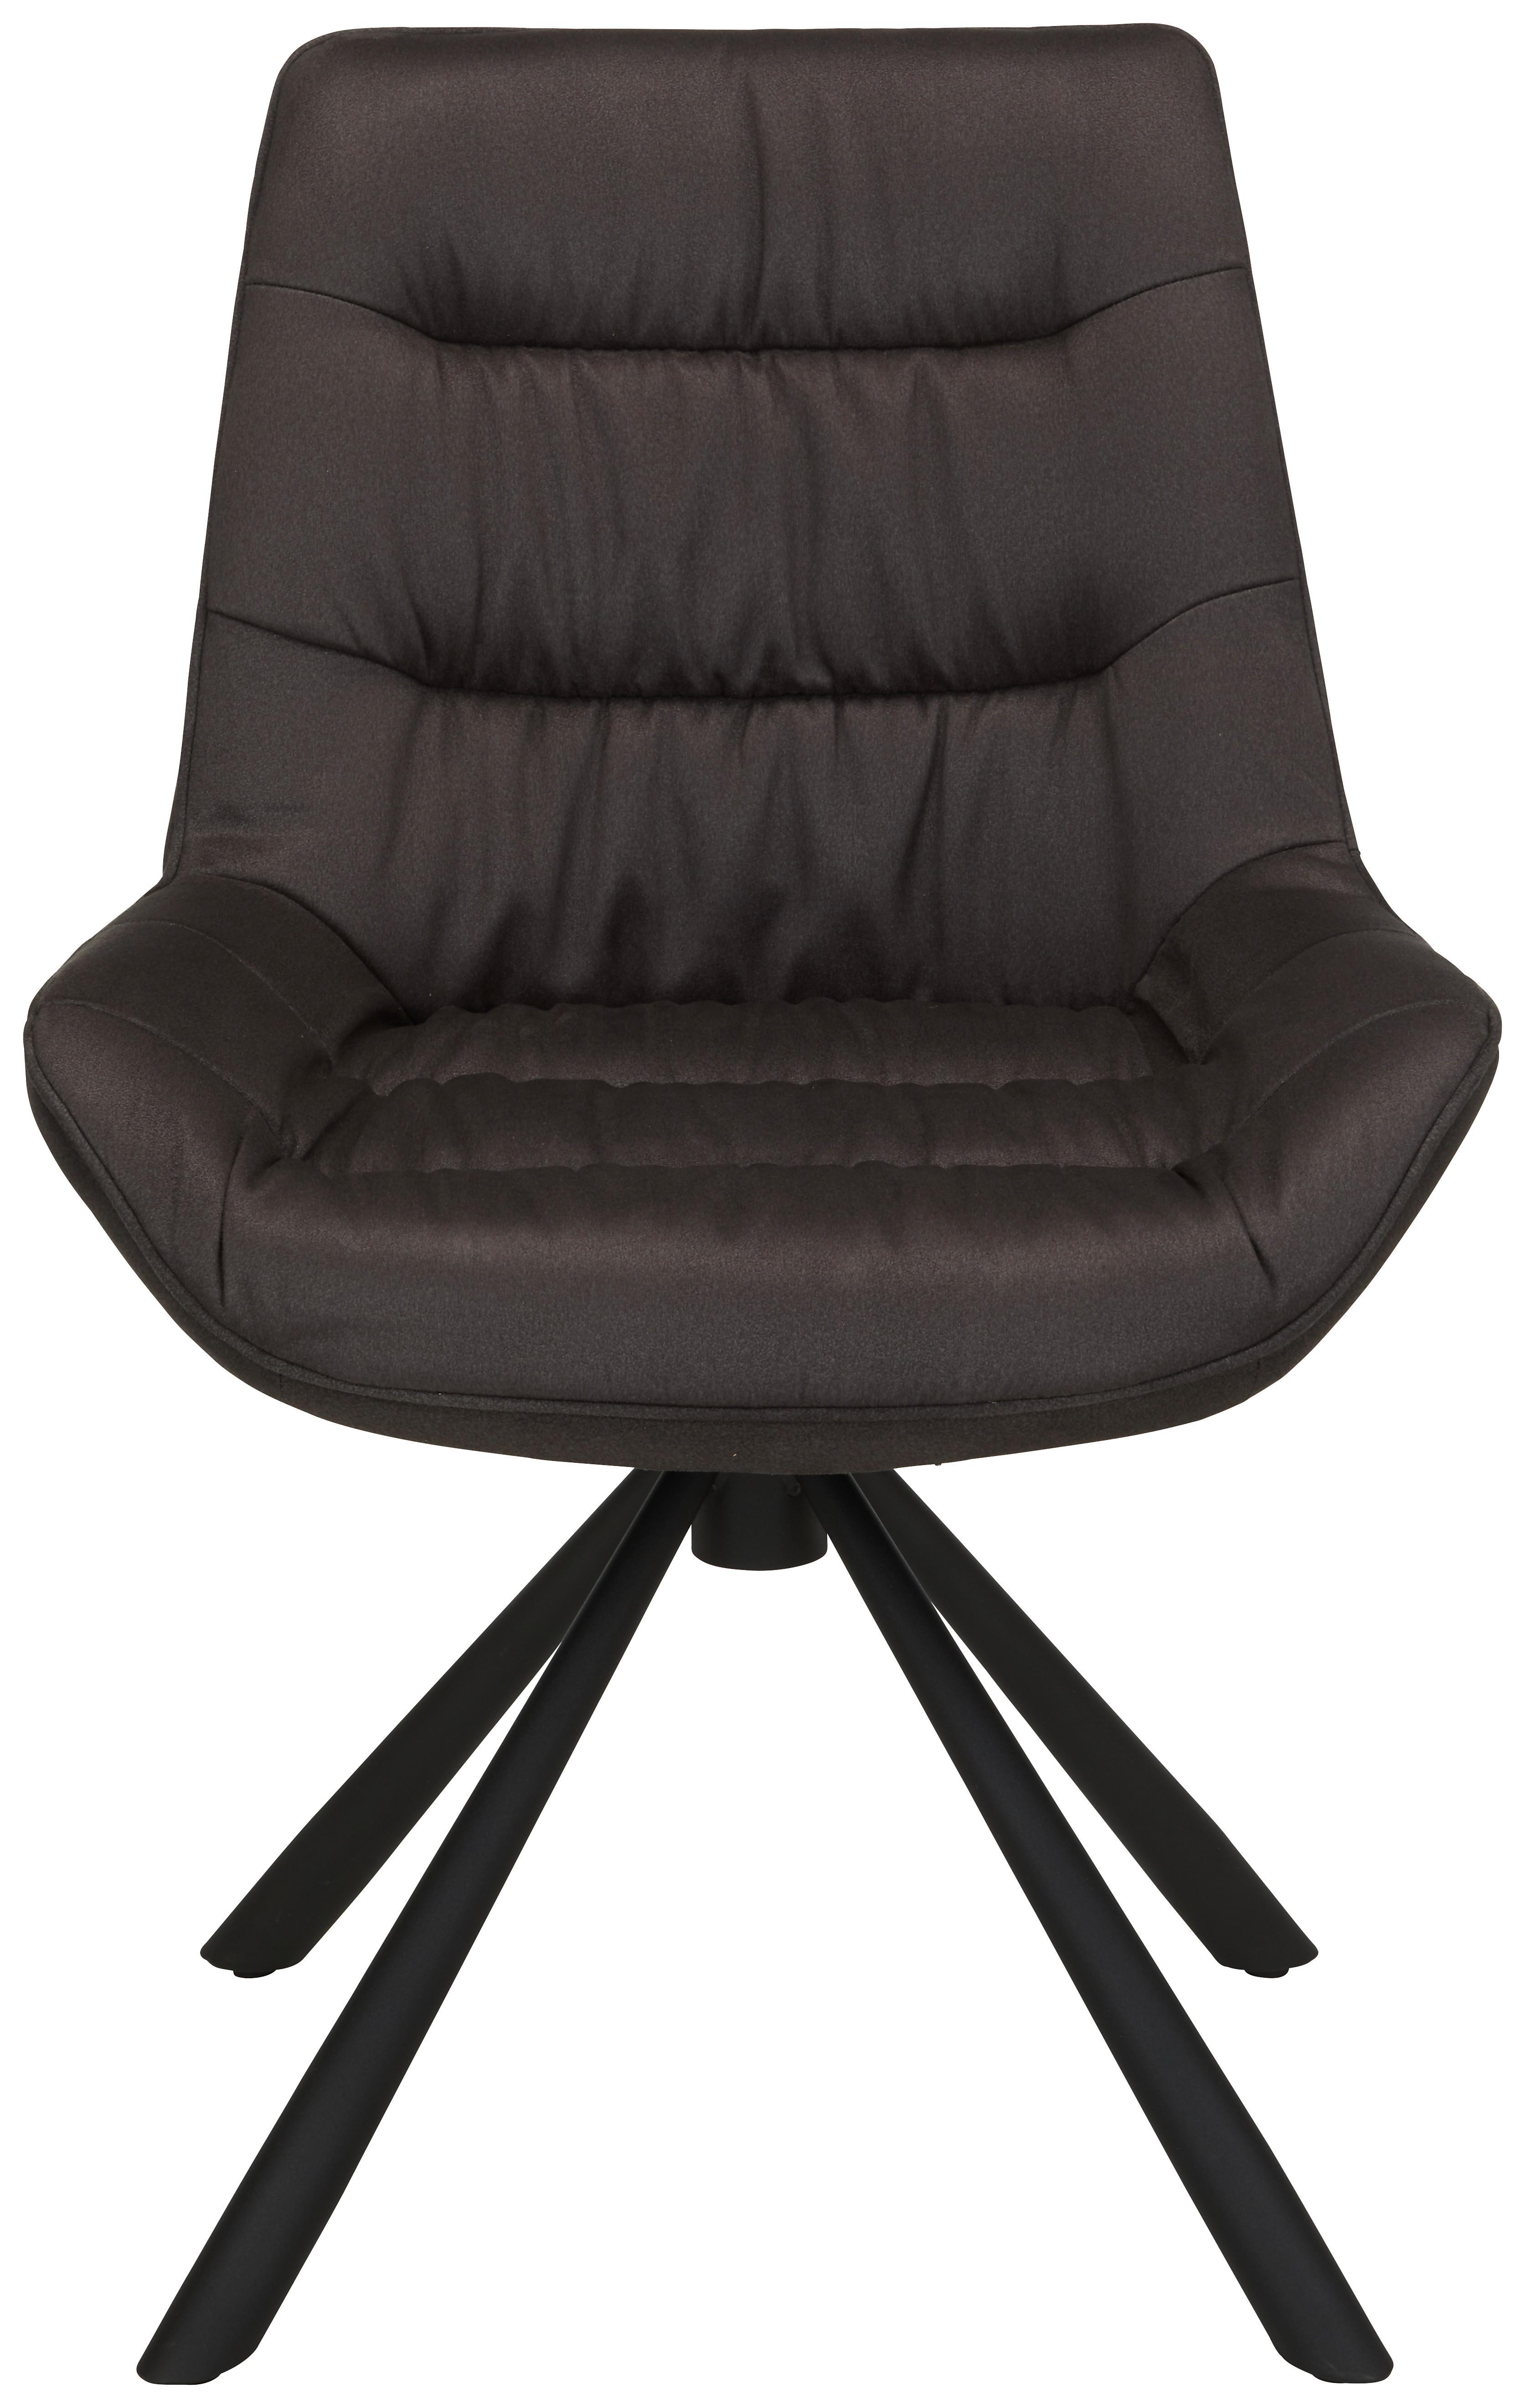 Stuhl in Grau/Schwarz - Schwarz/Grau, MODERN, Textil/Metall (57,5/85/64cm) - Modern Living